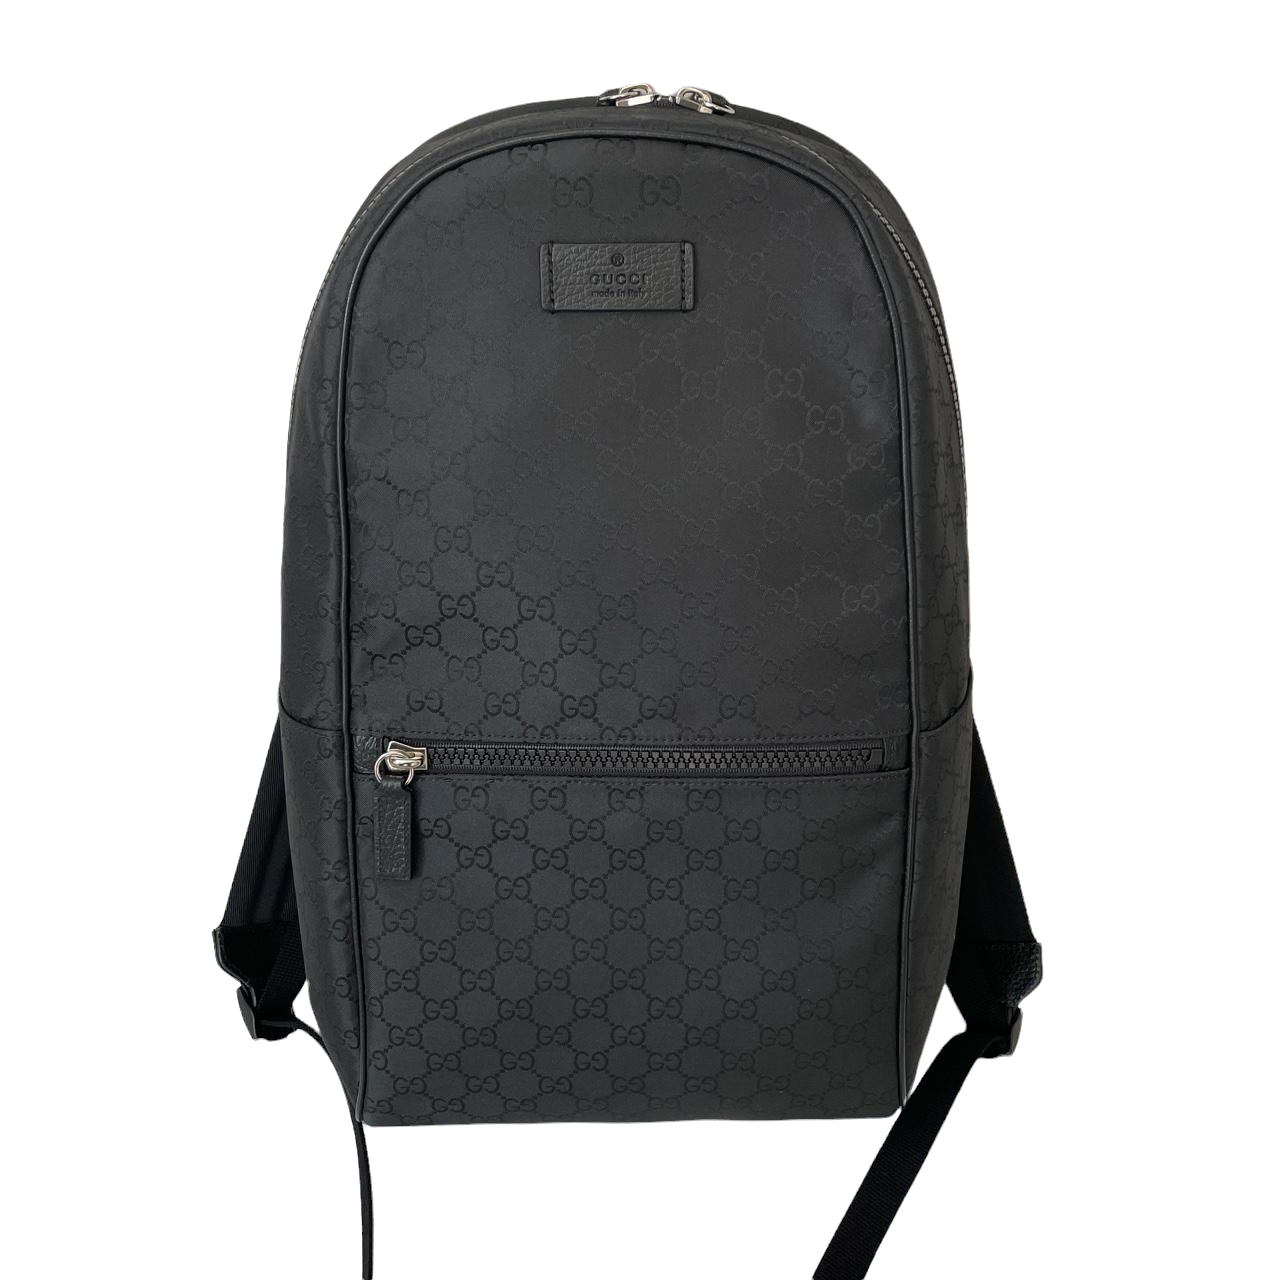 Gucci Nylon Backpack in Black